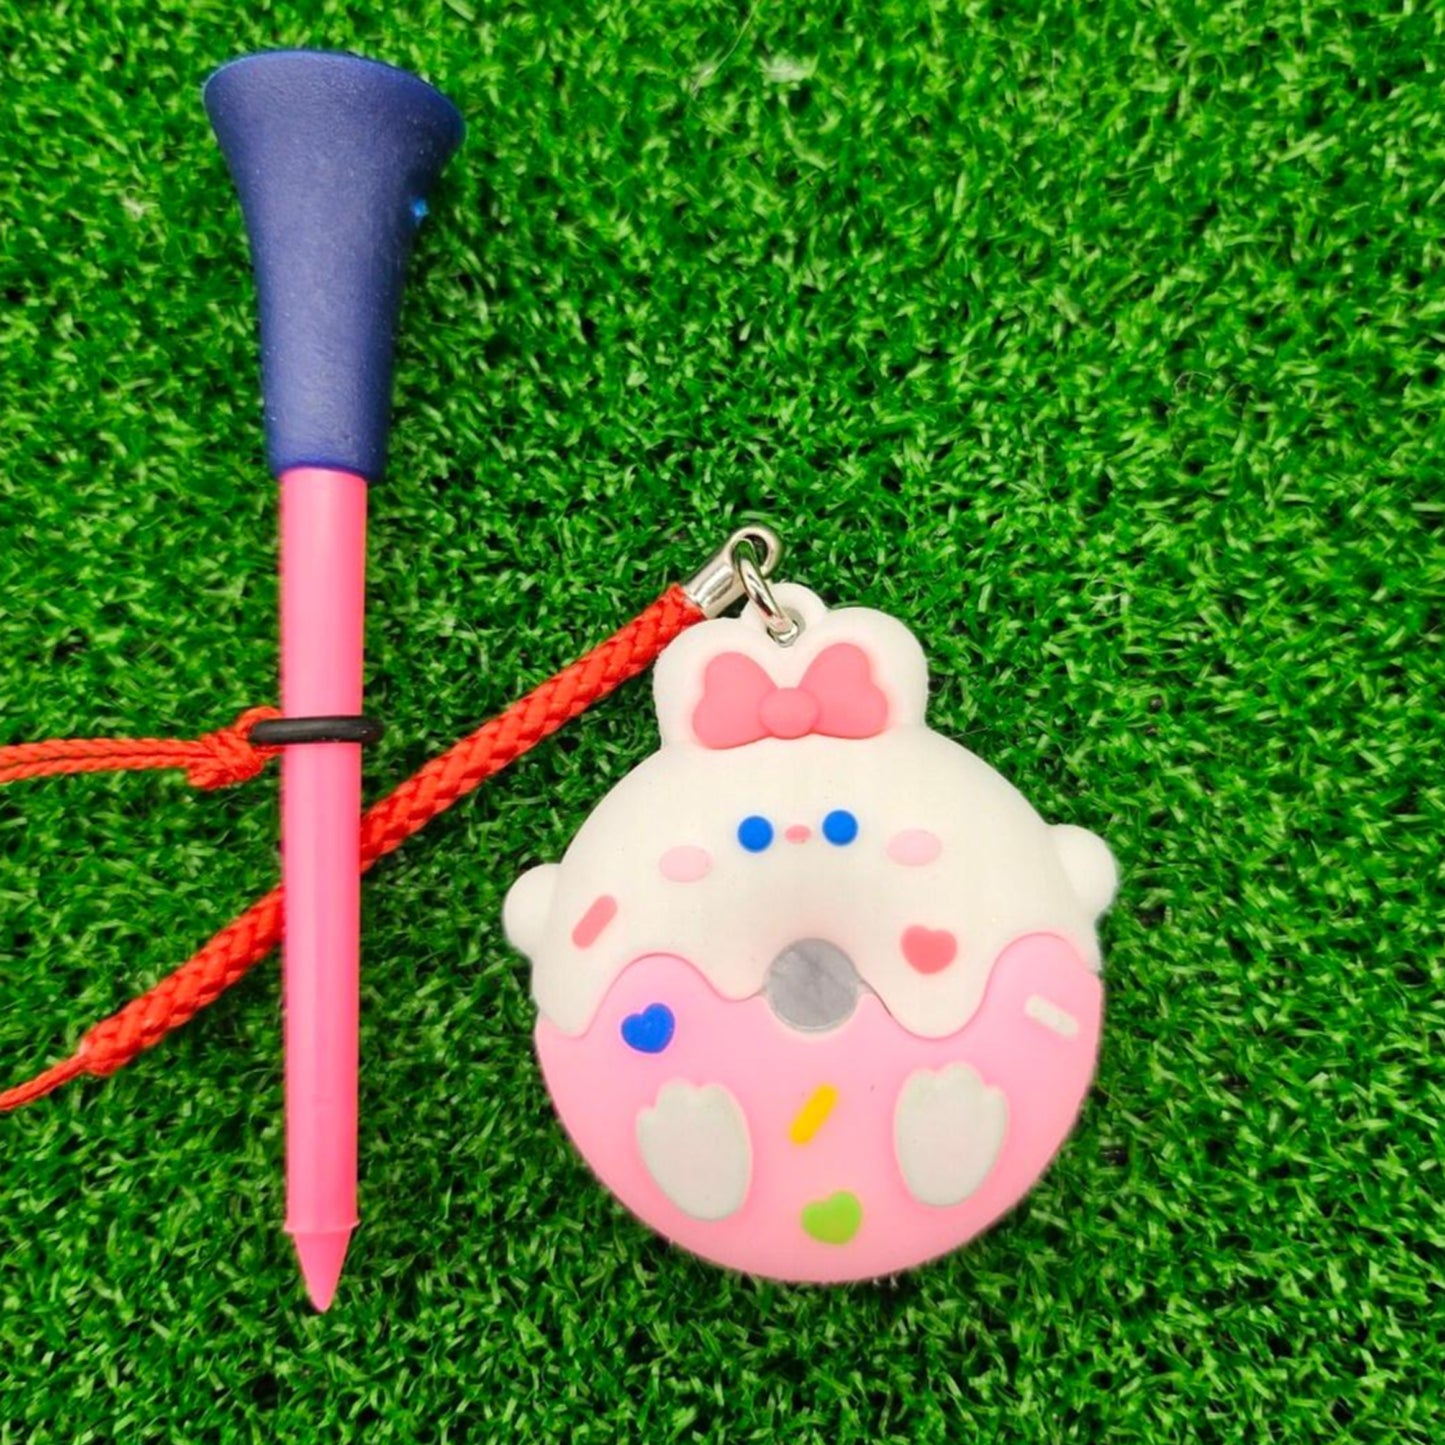 4 Types of Donut Golf Tee Hangers/Golf Accessories Caddy Supplies Golf Tee Holder Set